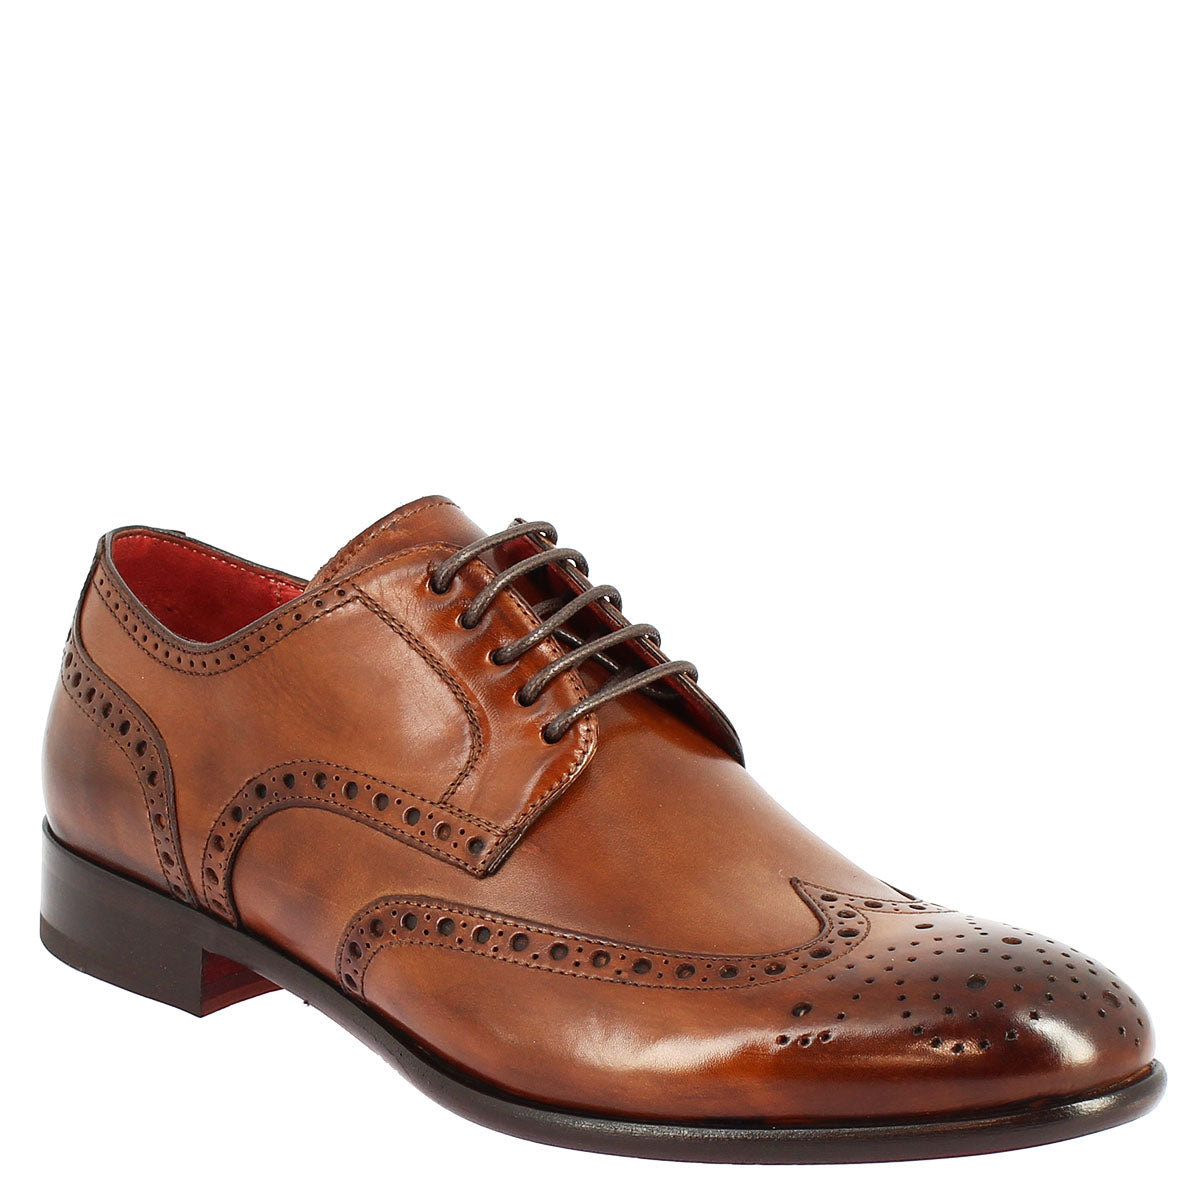 Men's brogue brogue shoes handmade in brandy leather